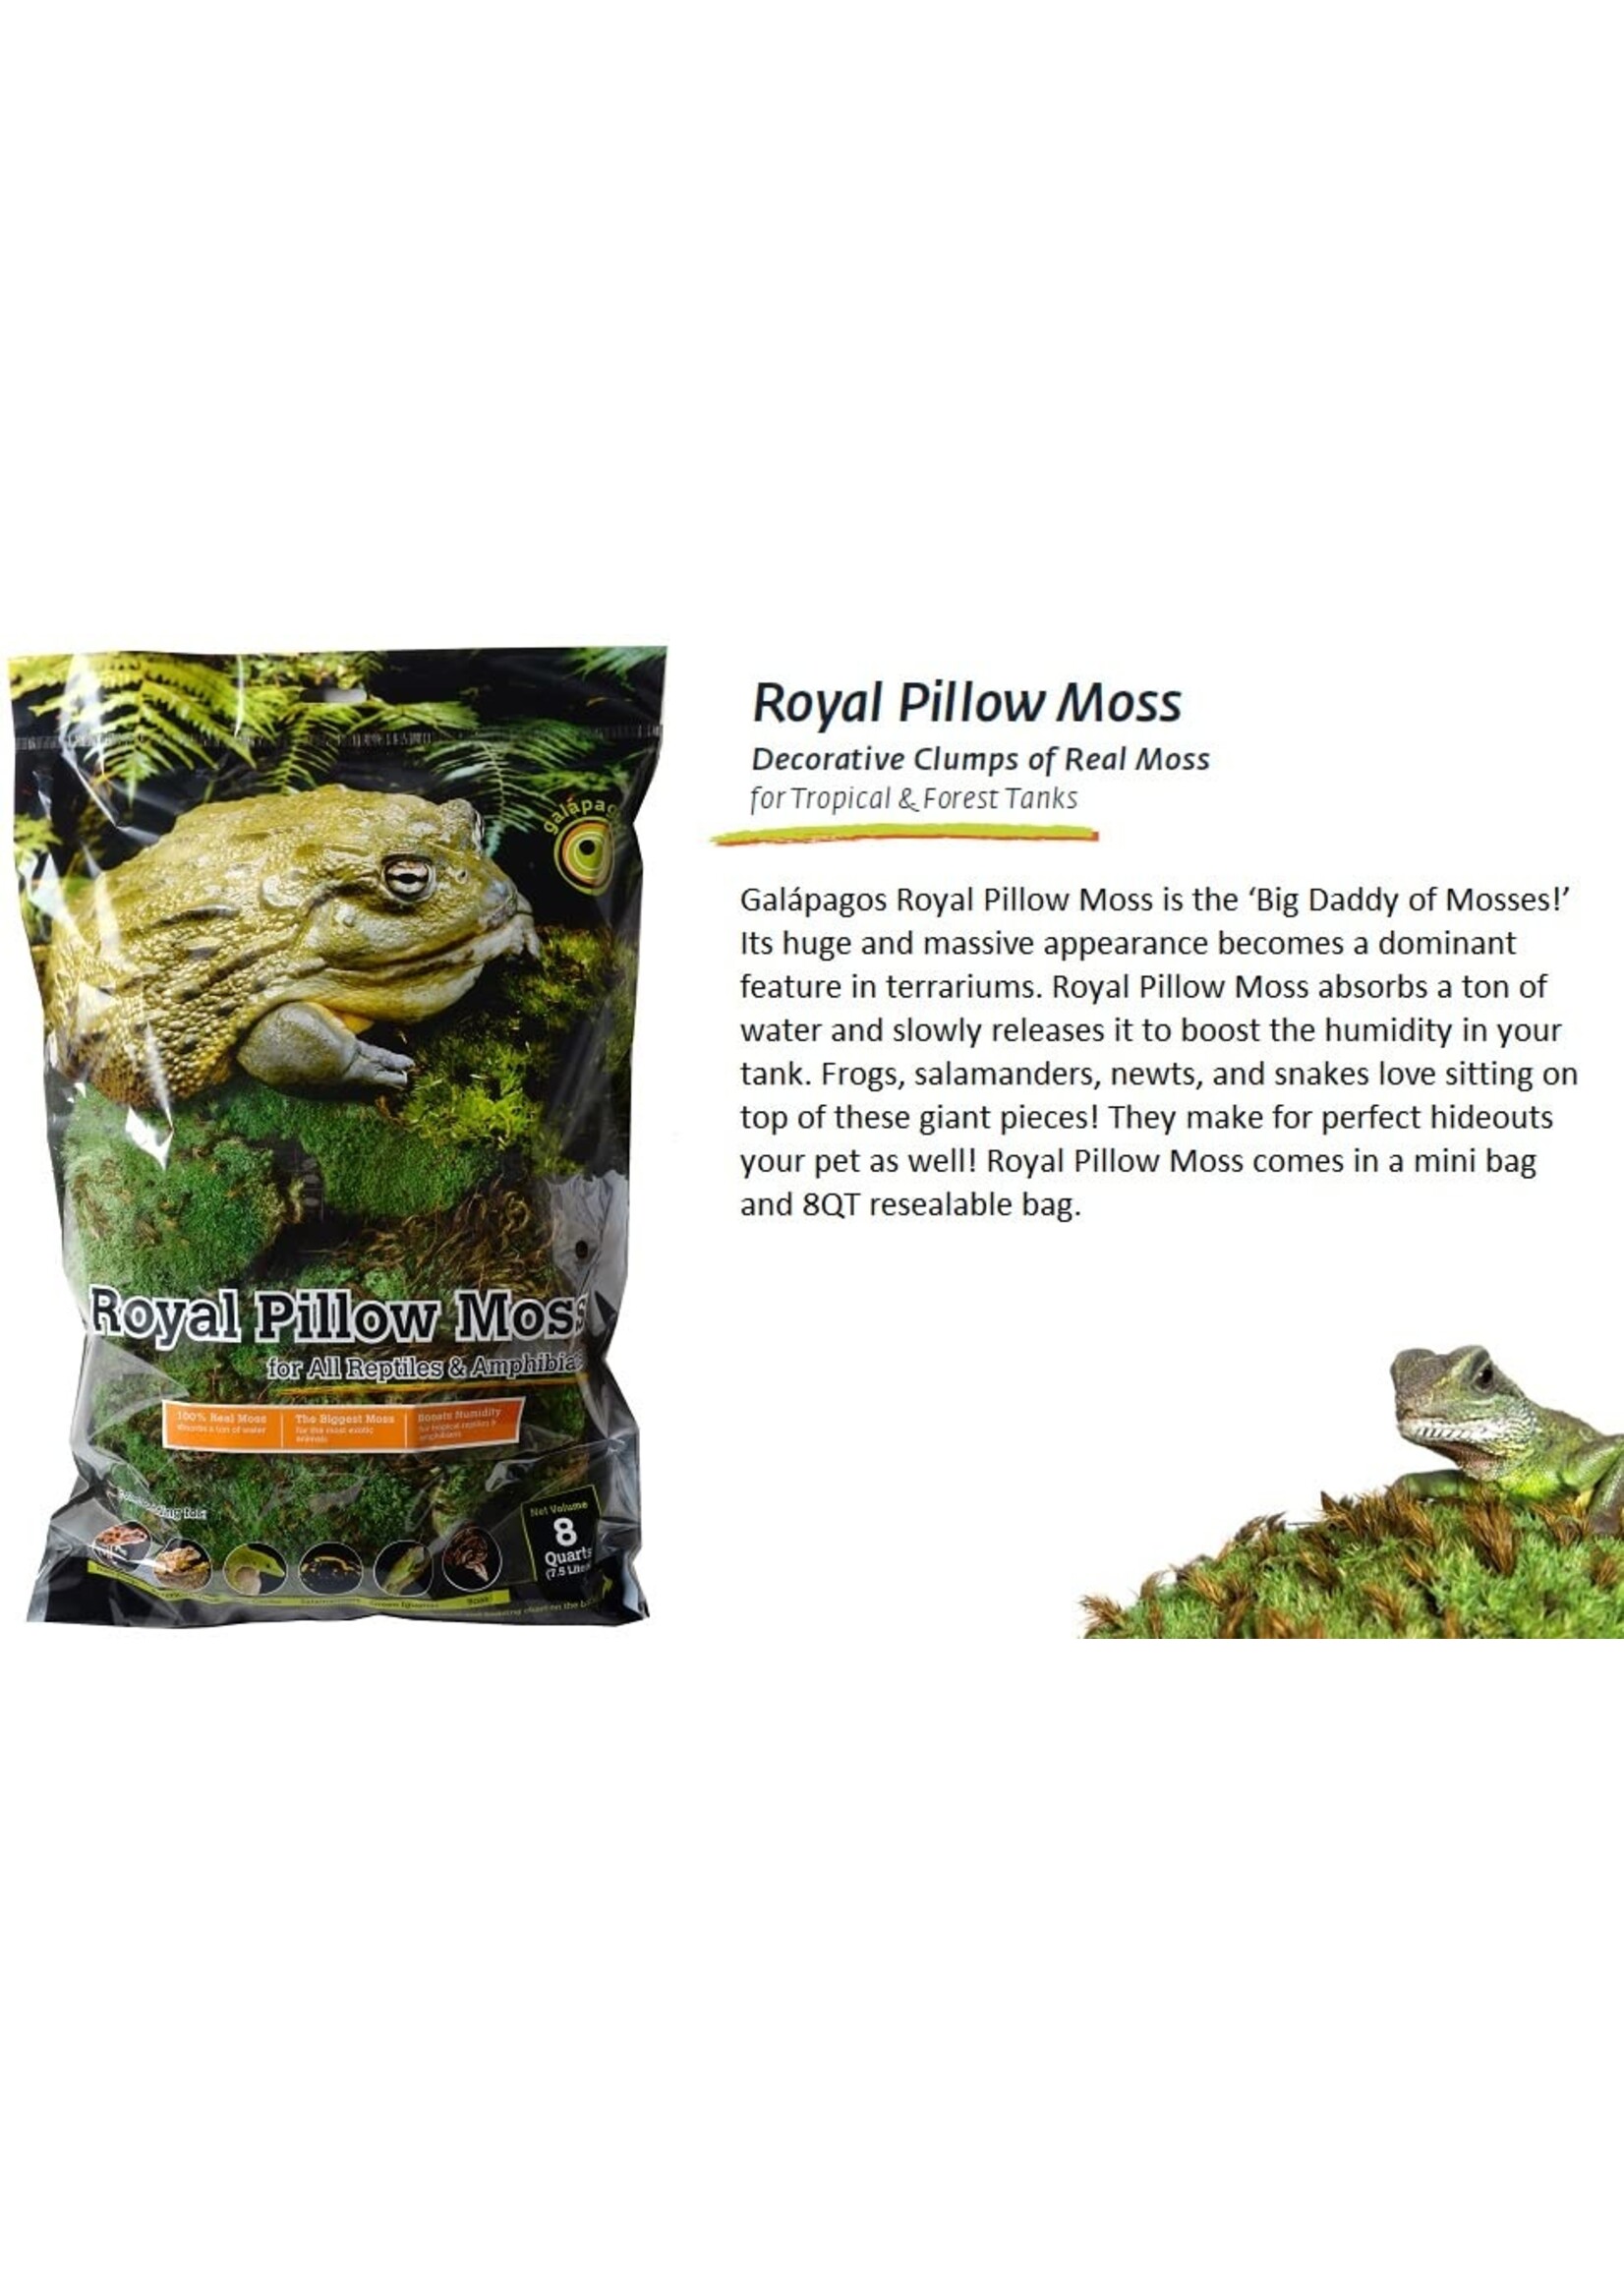 Royal Pillow Moss